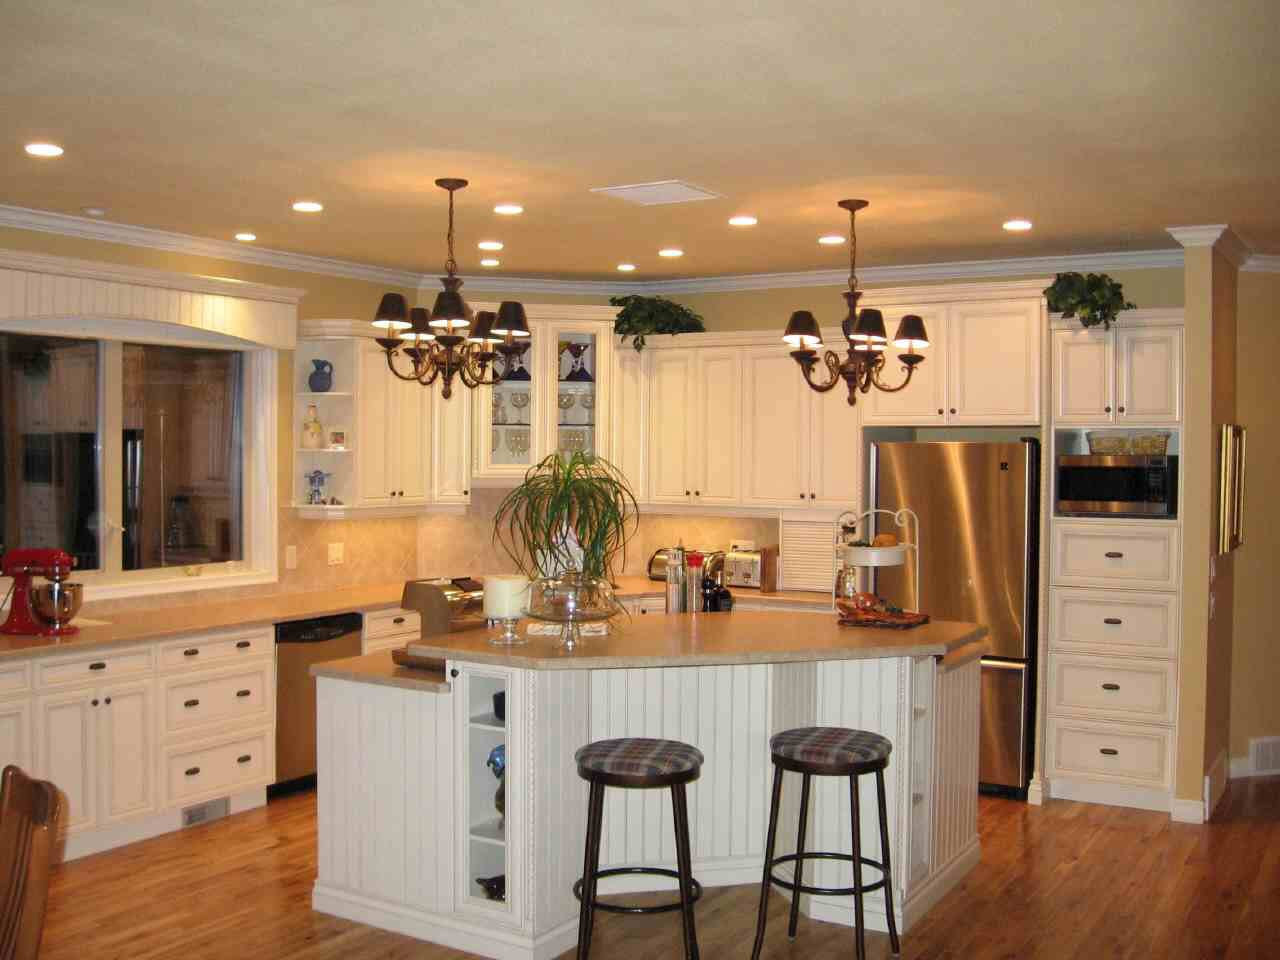 Great Kitchen Island Design Ideas for Small Kitchens 1280 x 960 · 109 kB · jpeg